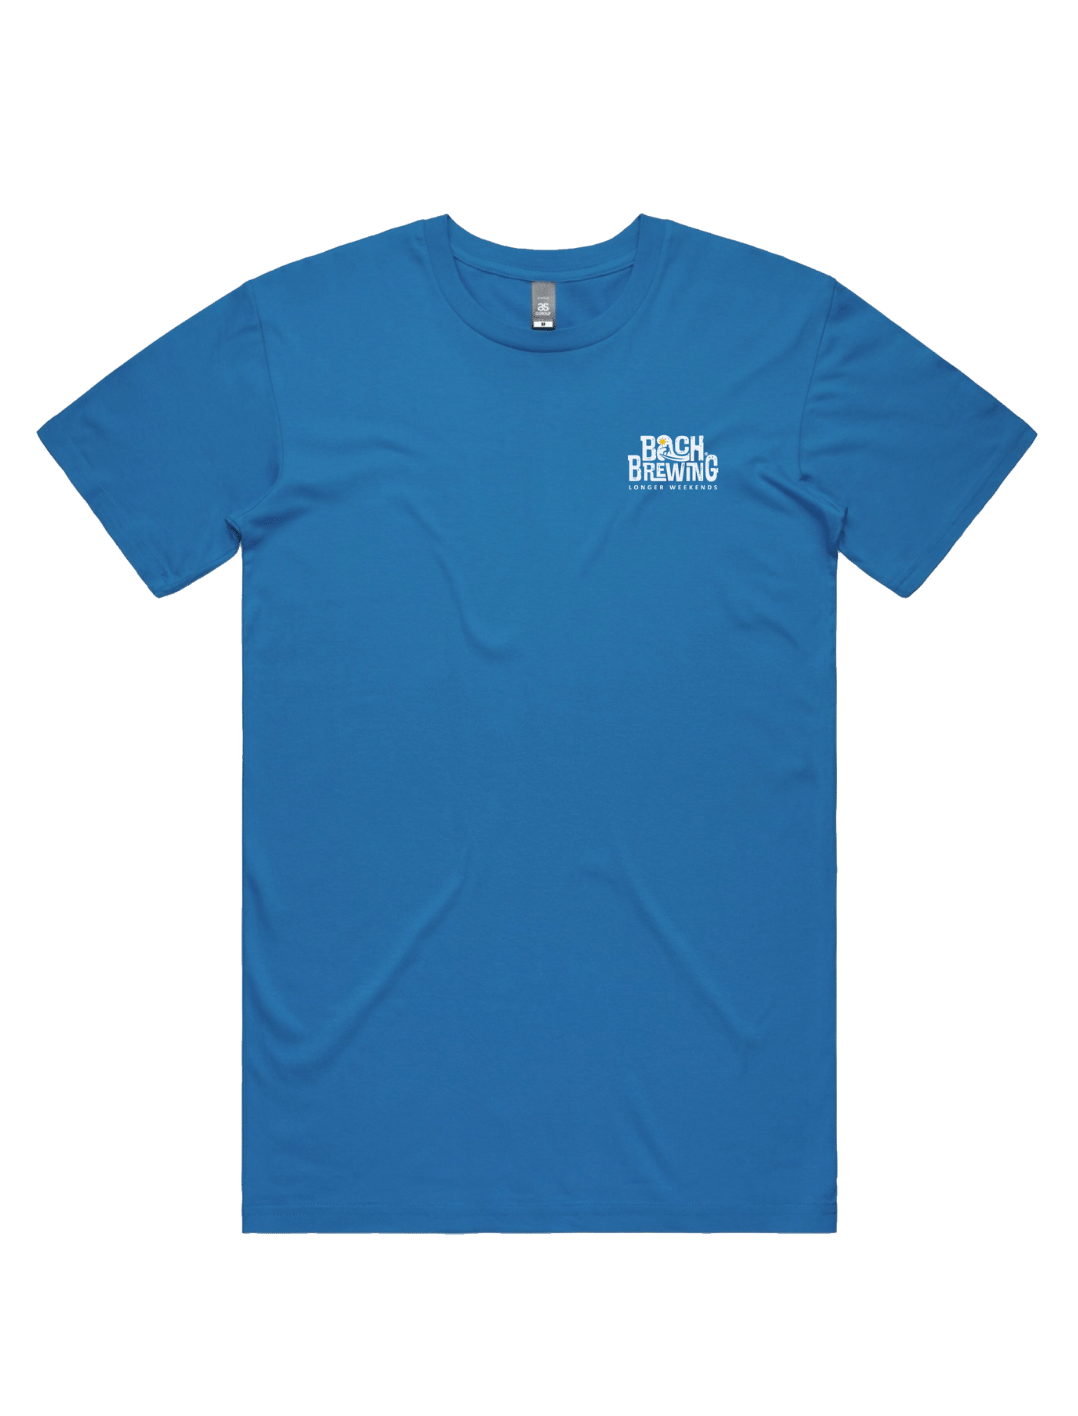 Bach Brewing Mens T-shirt - Sofa King (back graphic)